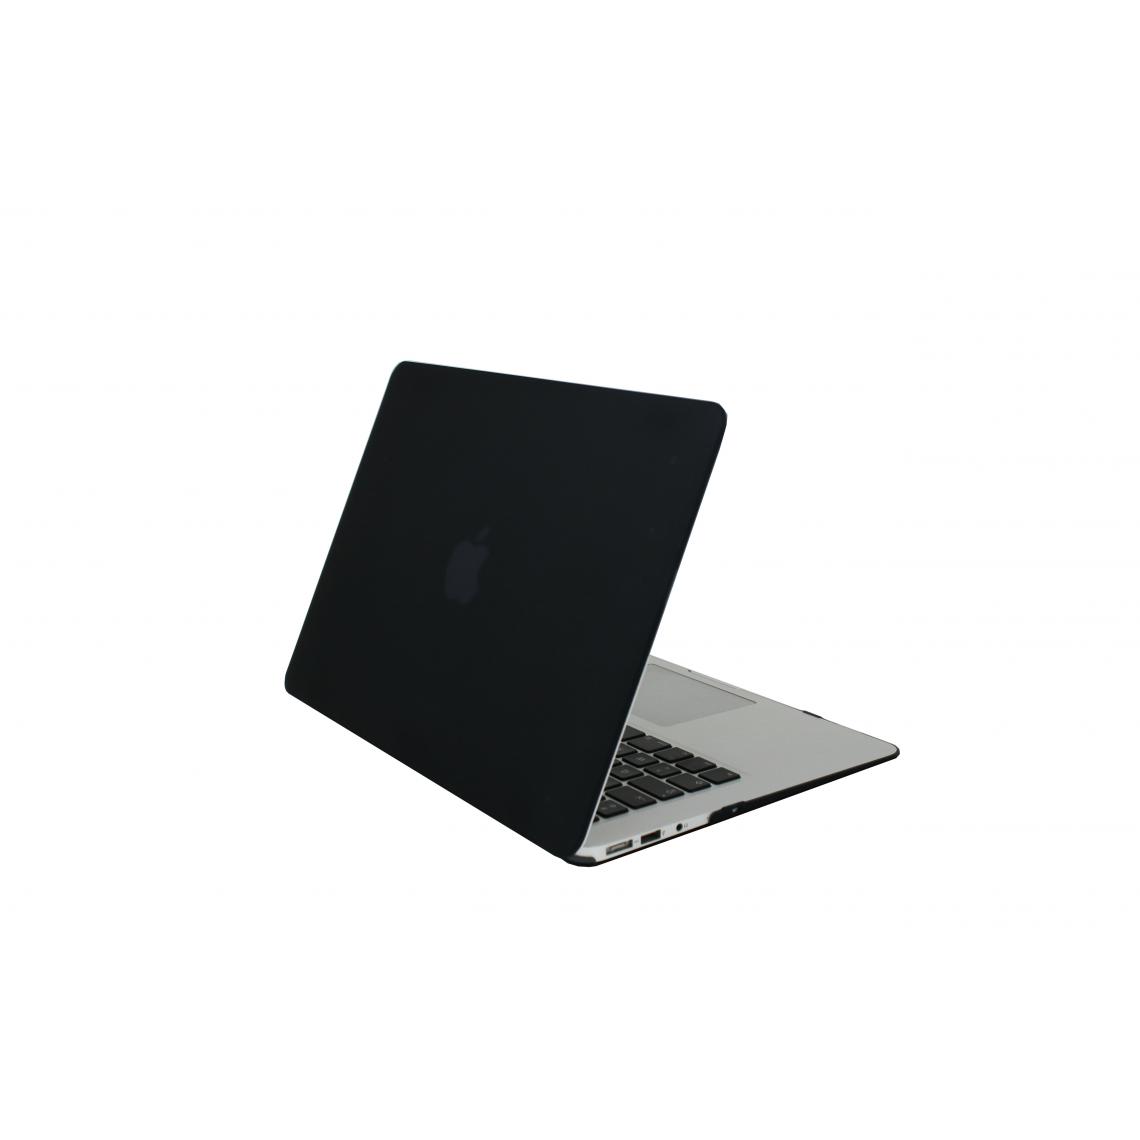 Apple - MacBook Air 13.3'' i5-5250U 4Go 128Go SSD - 2015 Coque Noir - MacBook